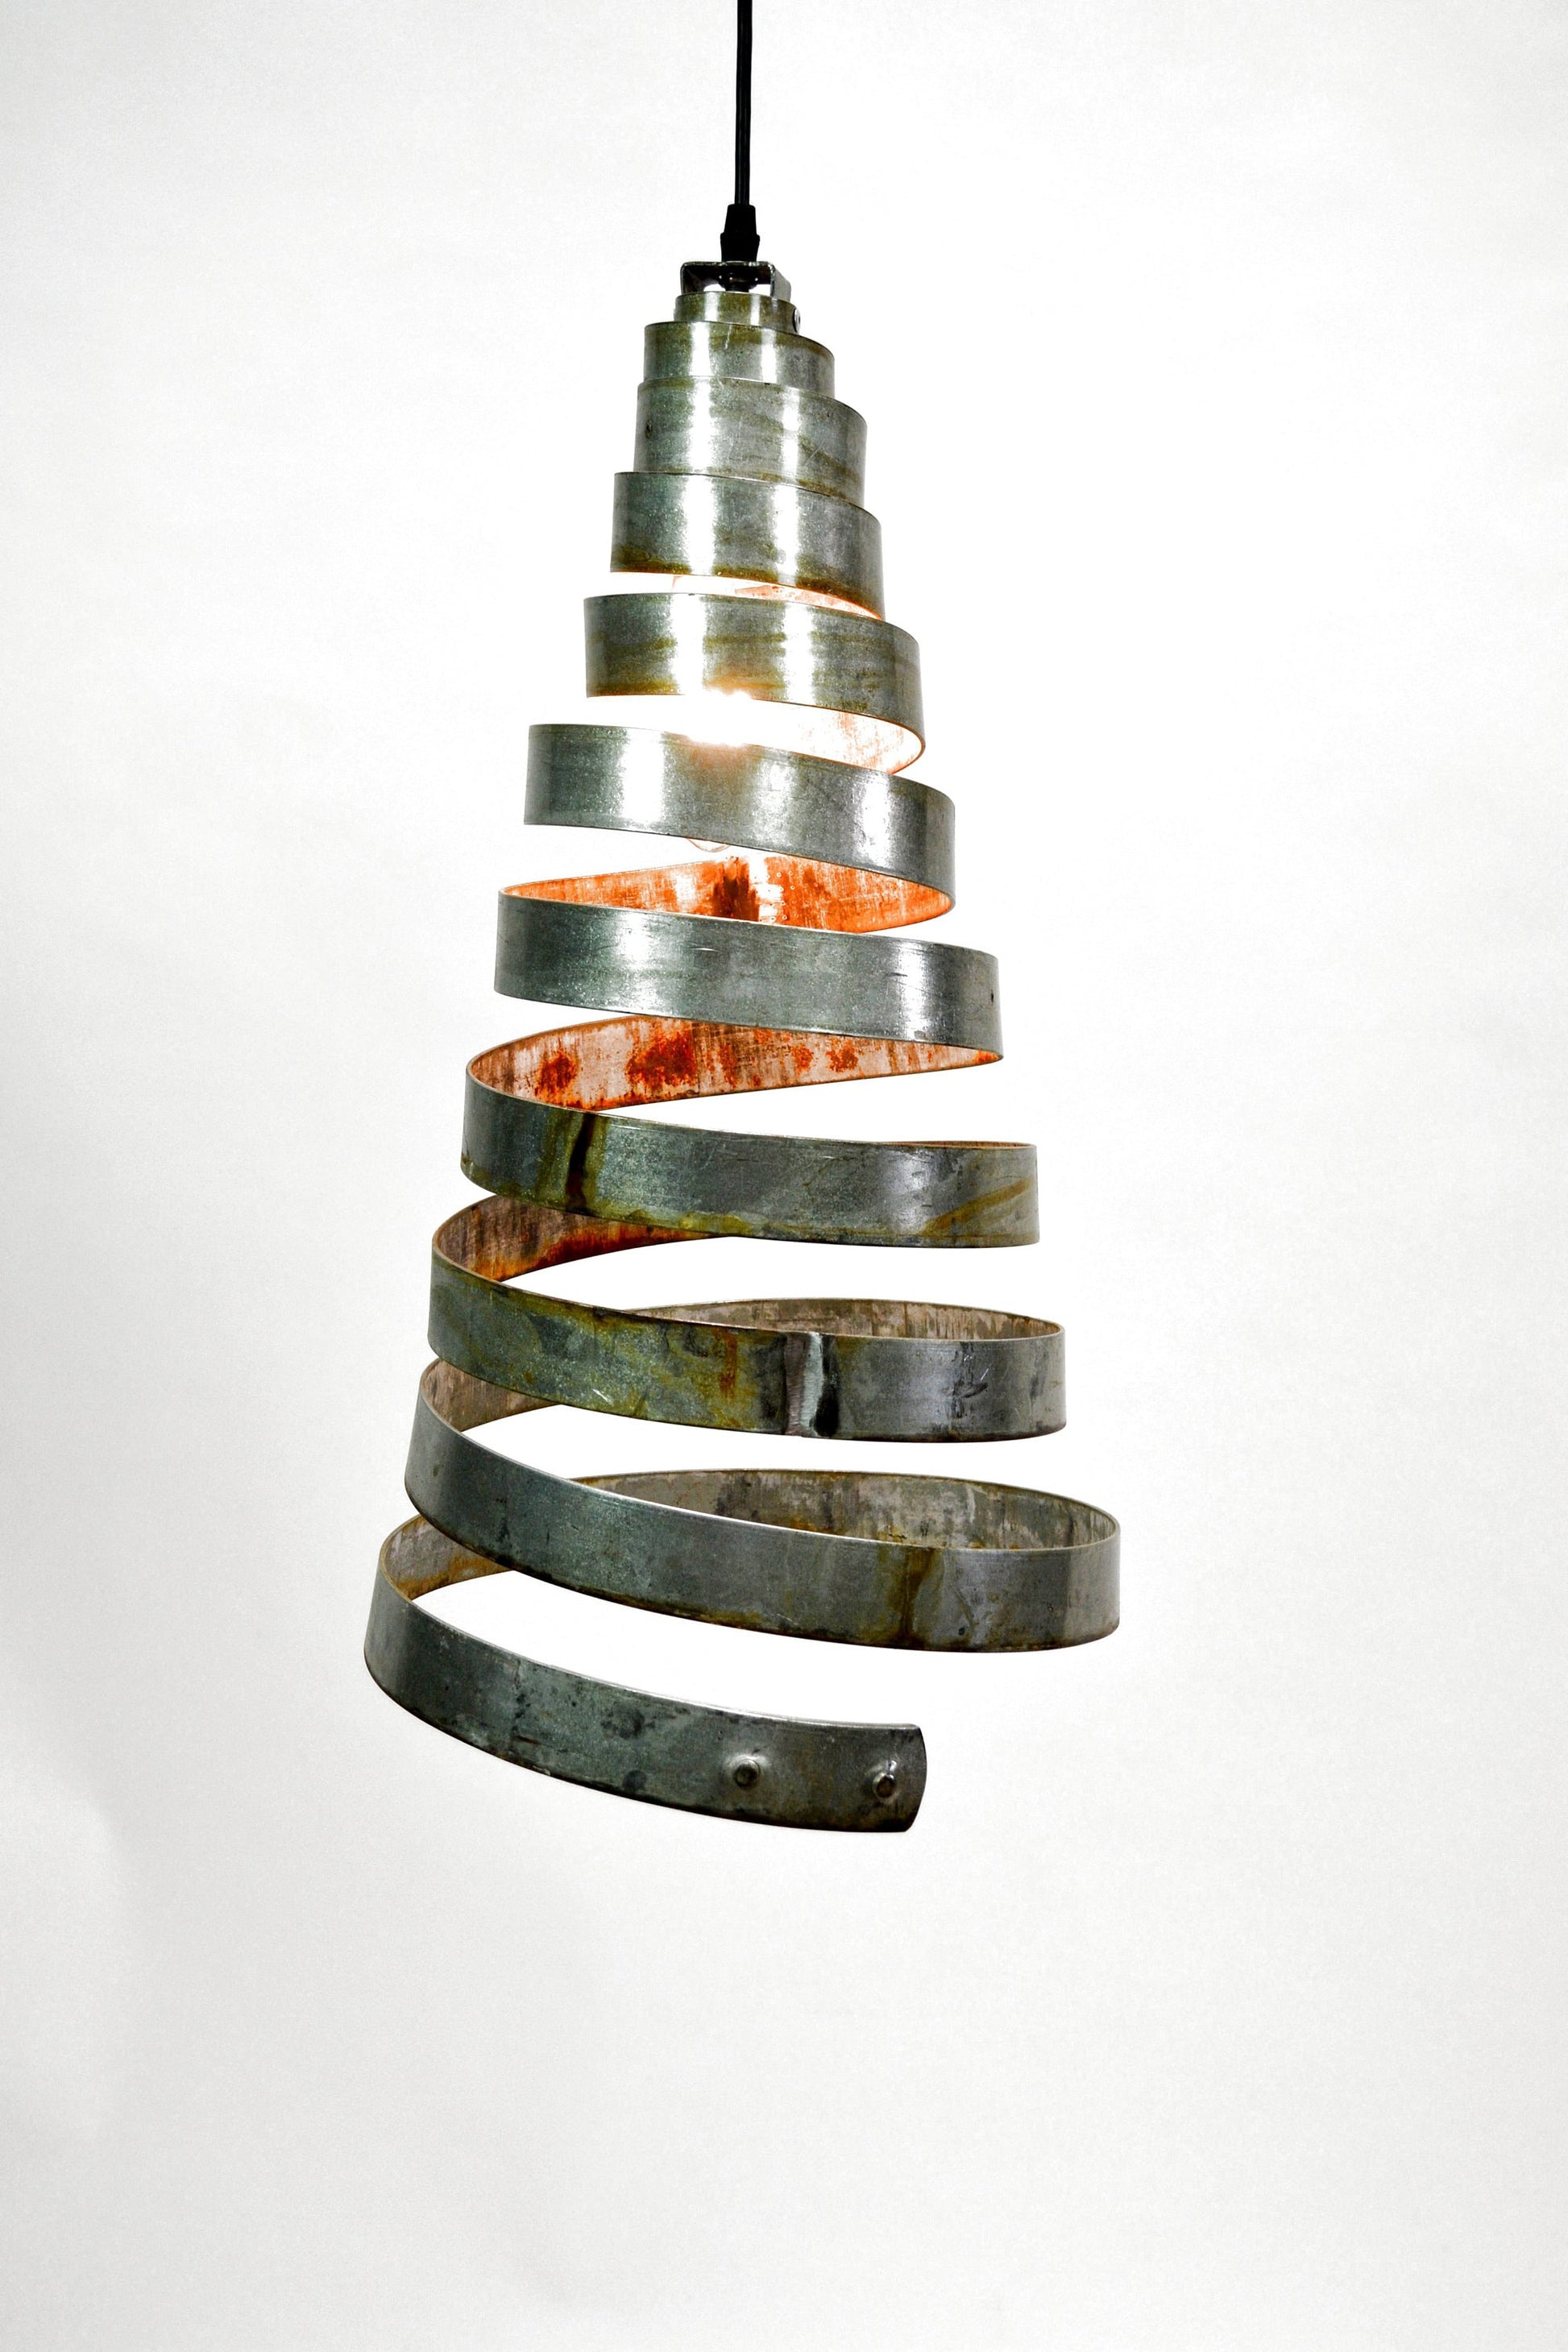 Wine Barrel Ring Pendant Light - Kahara - Made from retired California wine barrel rings - 100% Recycled!